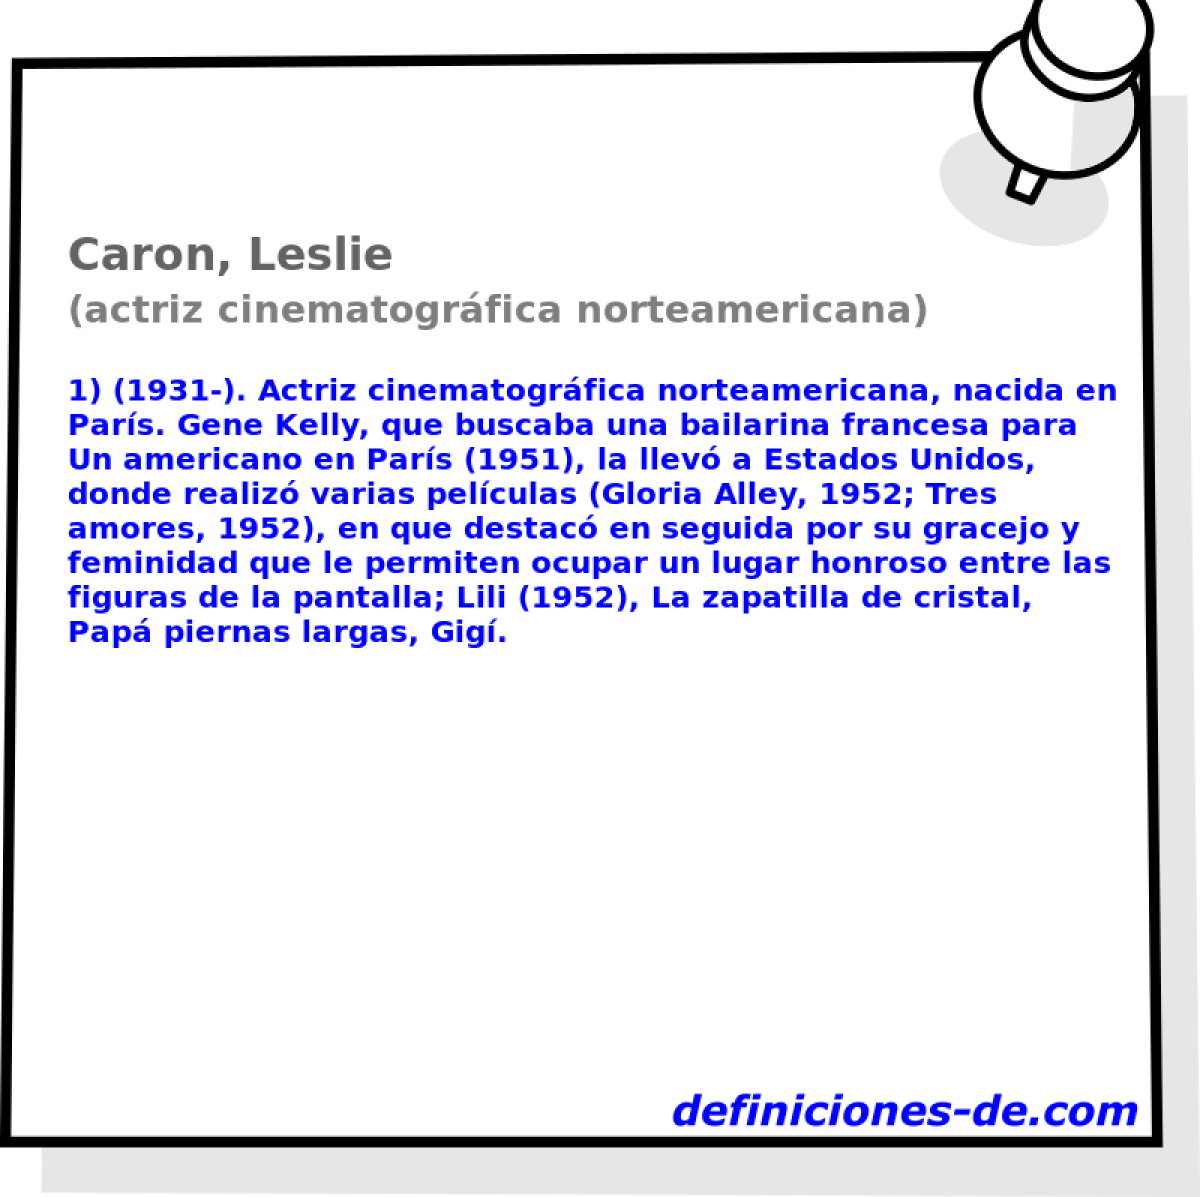 Caron, Leslie (actriz cinematogrfica norteamericana)